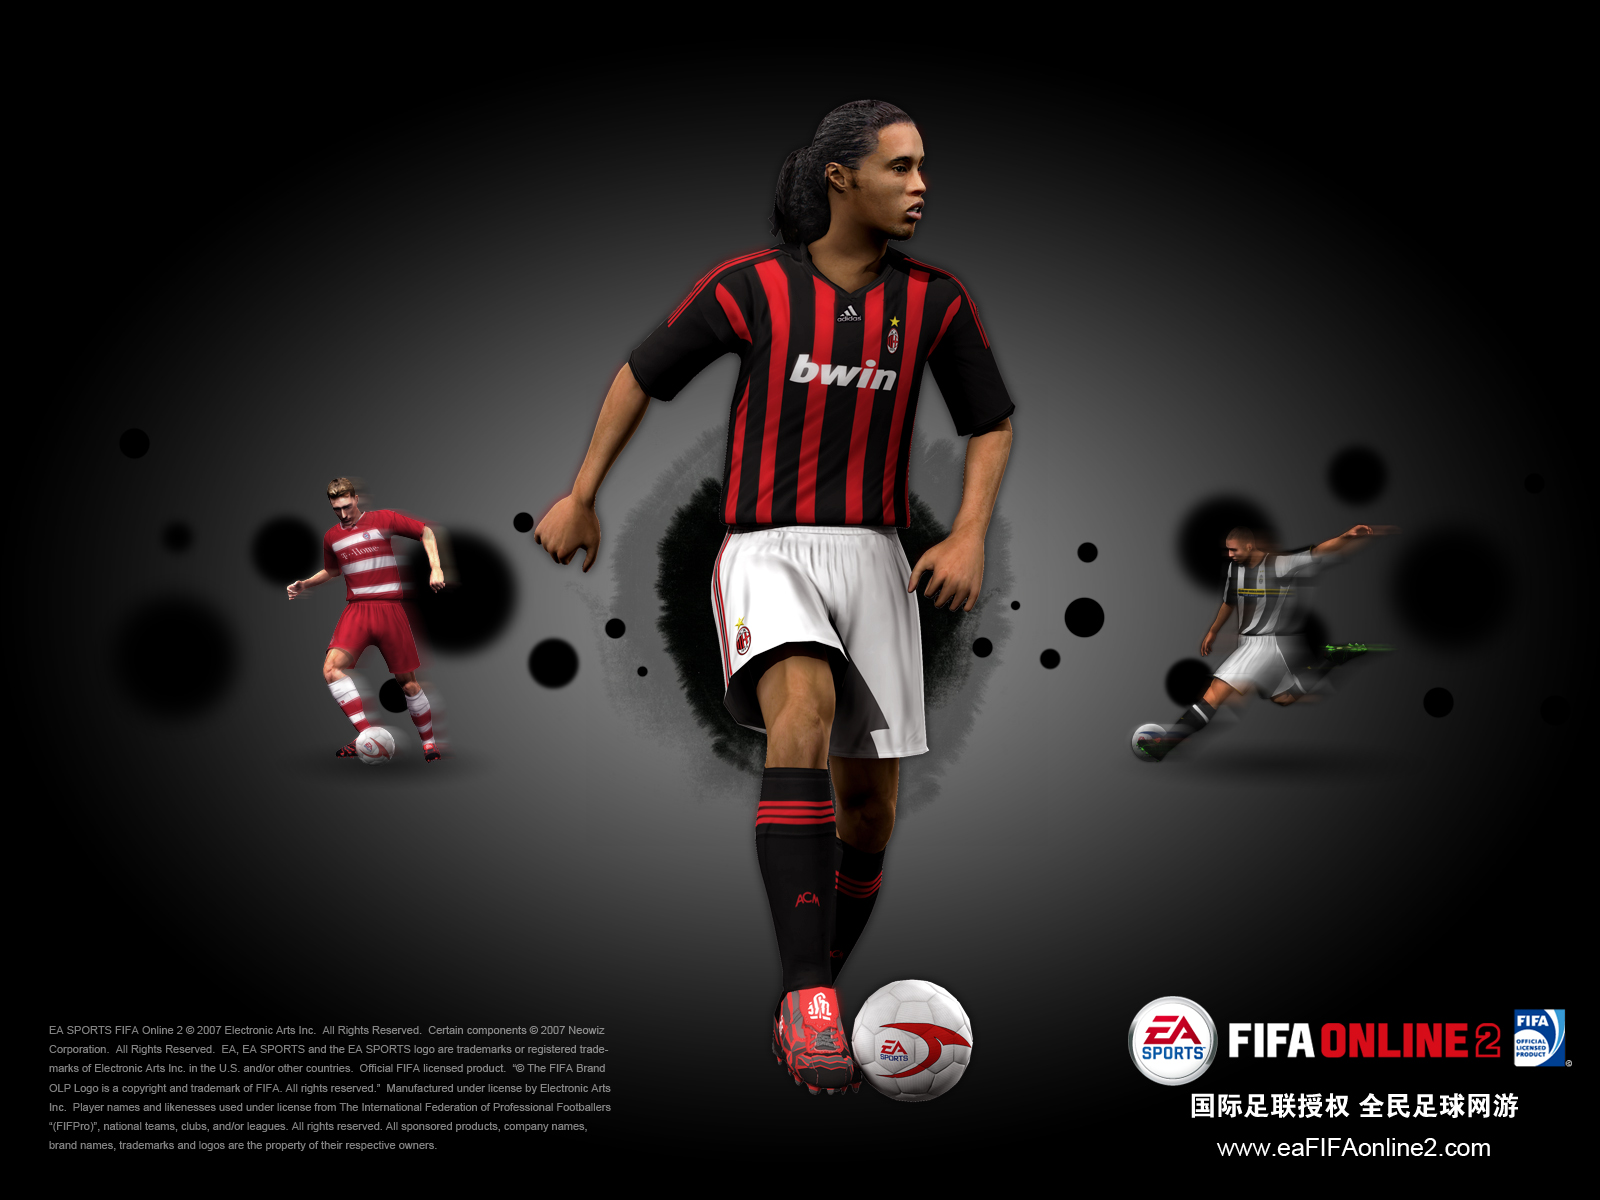 EA SPORTS FIFA Online 2 网络足球游戏(壁纸